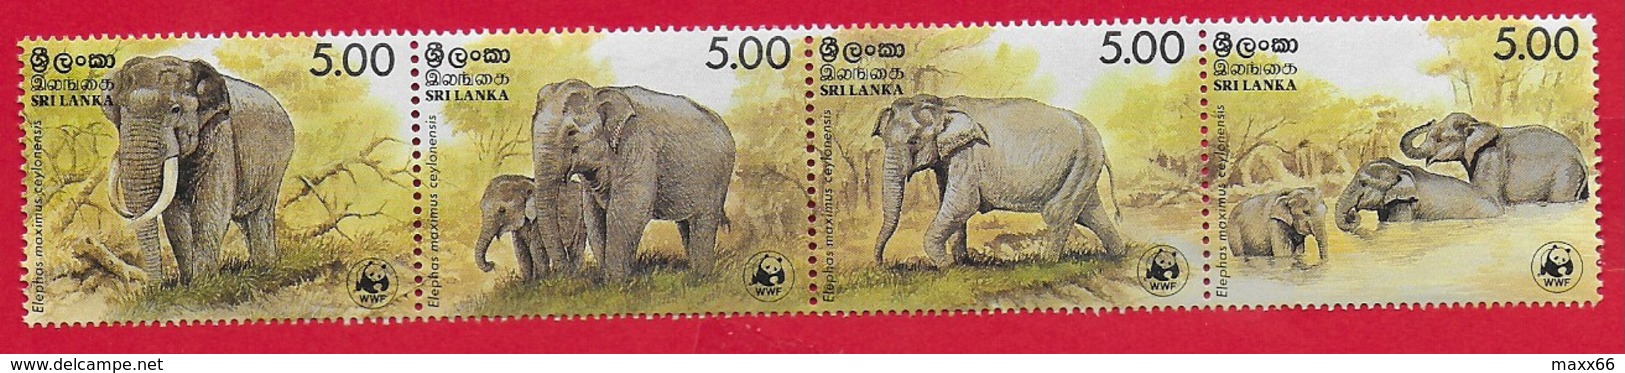 SRI LANKA MNH - 1986 WWF Sri Lanka Wild Elephant - 5,00 X 4 රු. - Michel LK 753 - 756 - Sri Lanka (Ceilán) (1948-...)